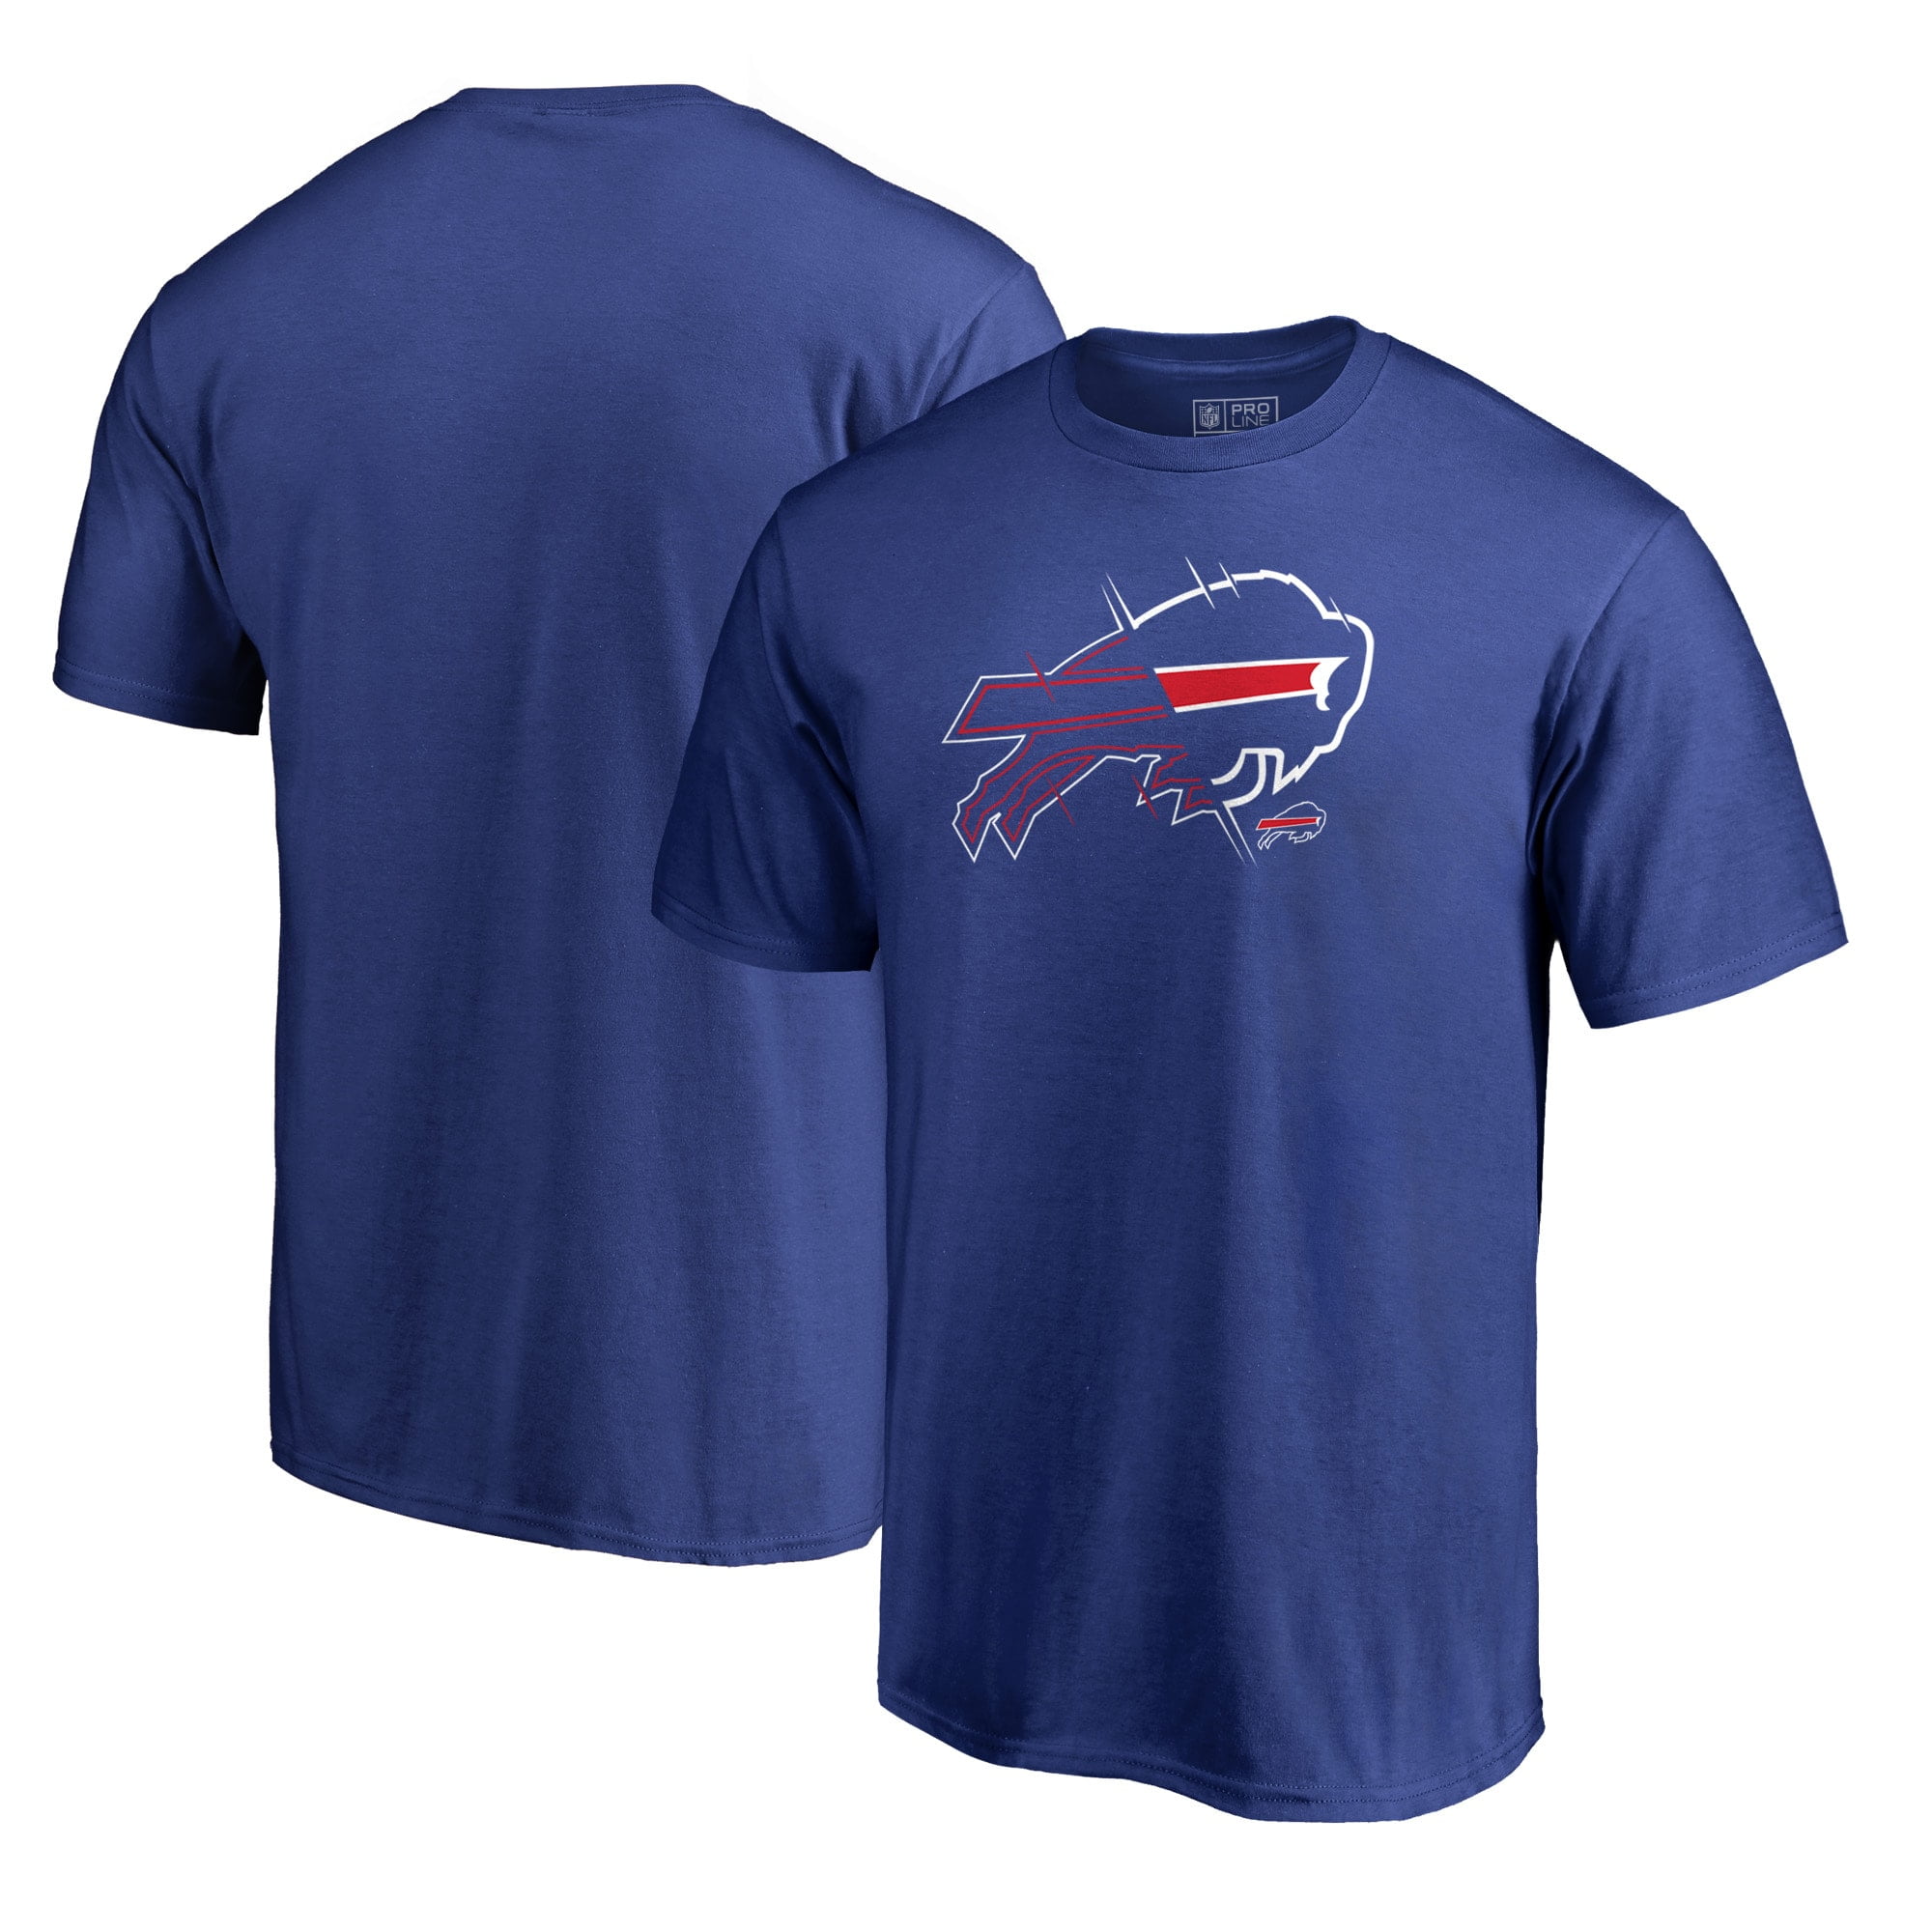 Buffalo Bills T-Shirts - Walmart.com